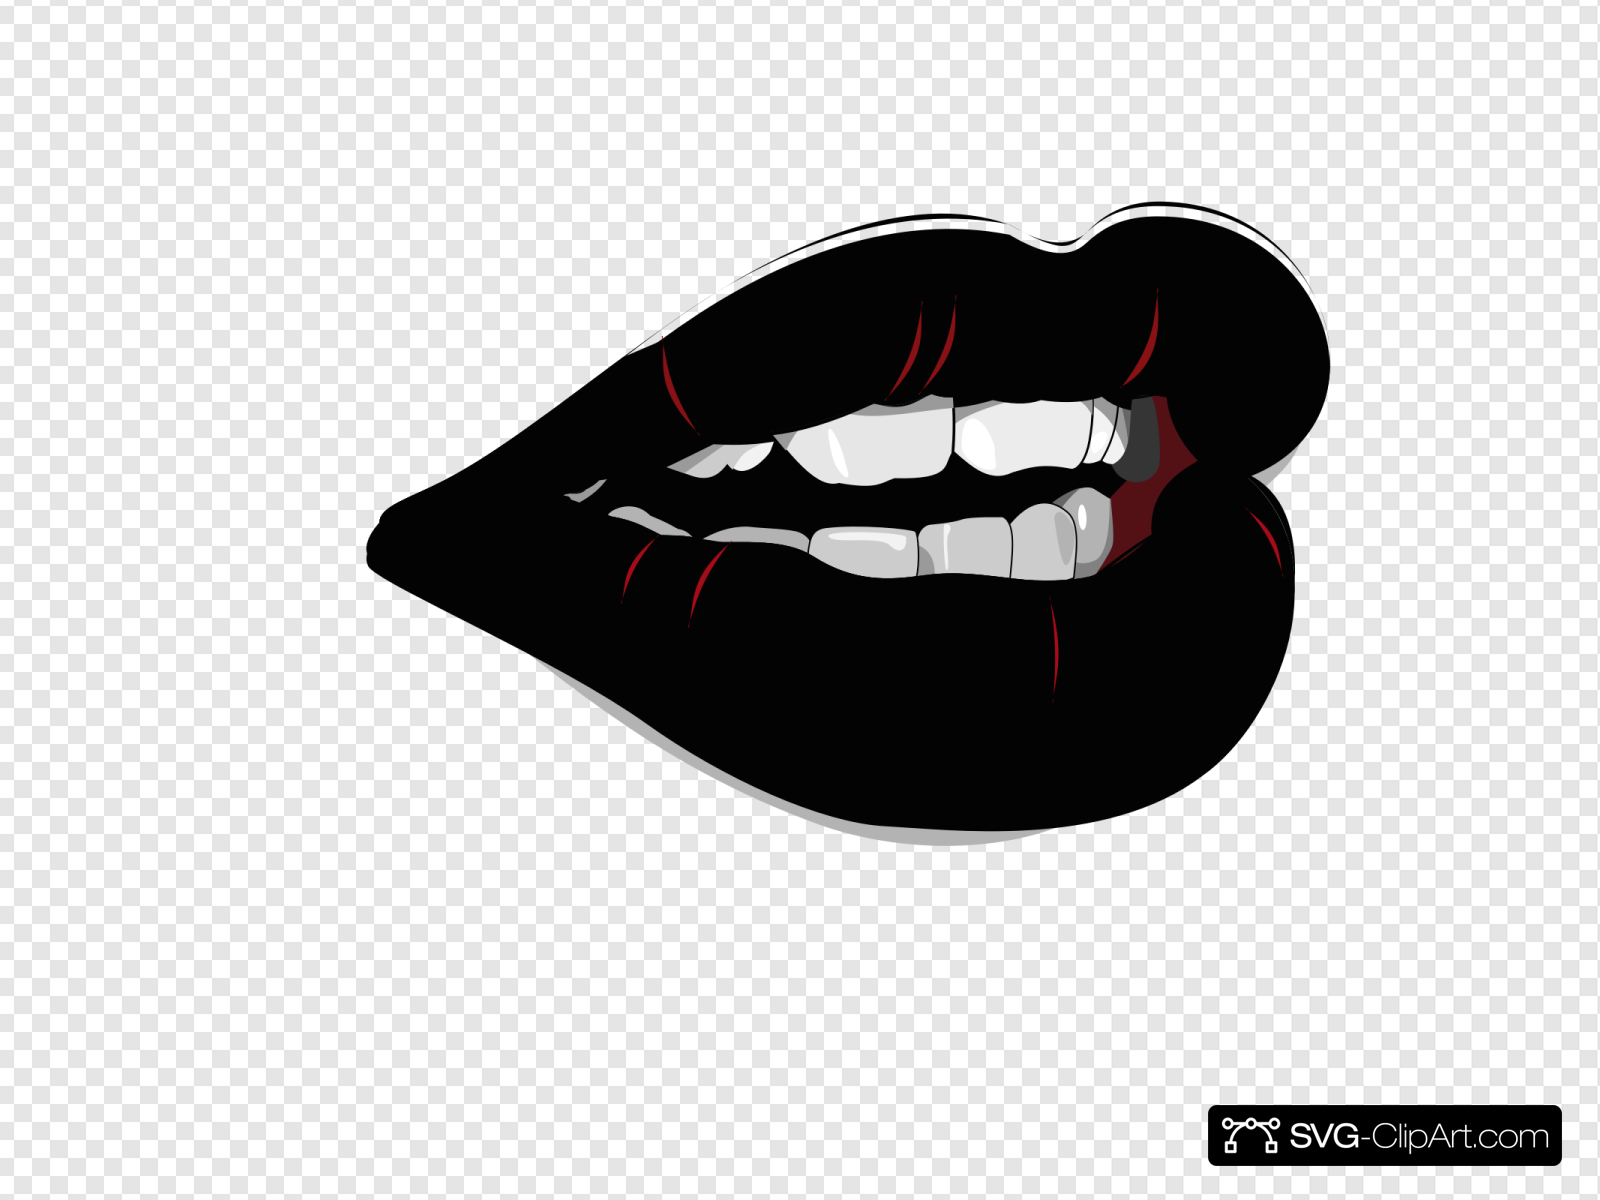 Black Lips Clip art, Icon and SVG.